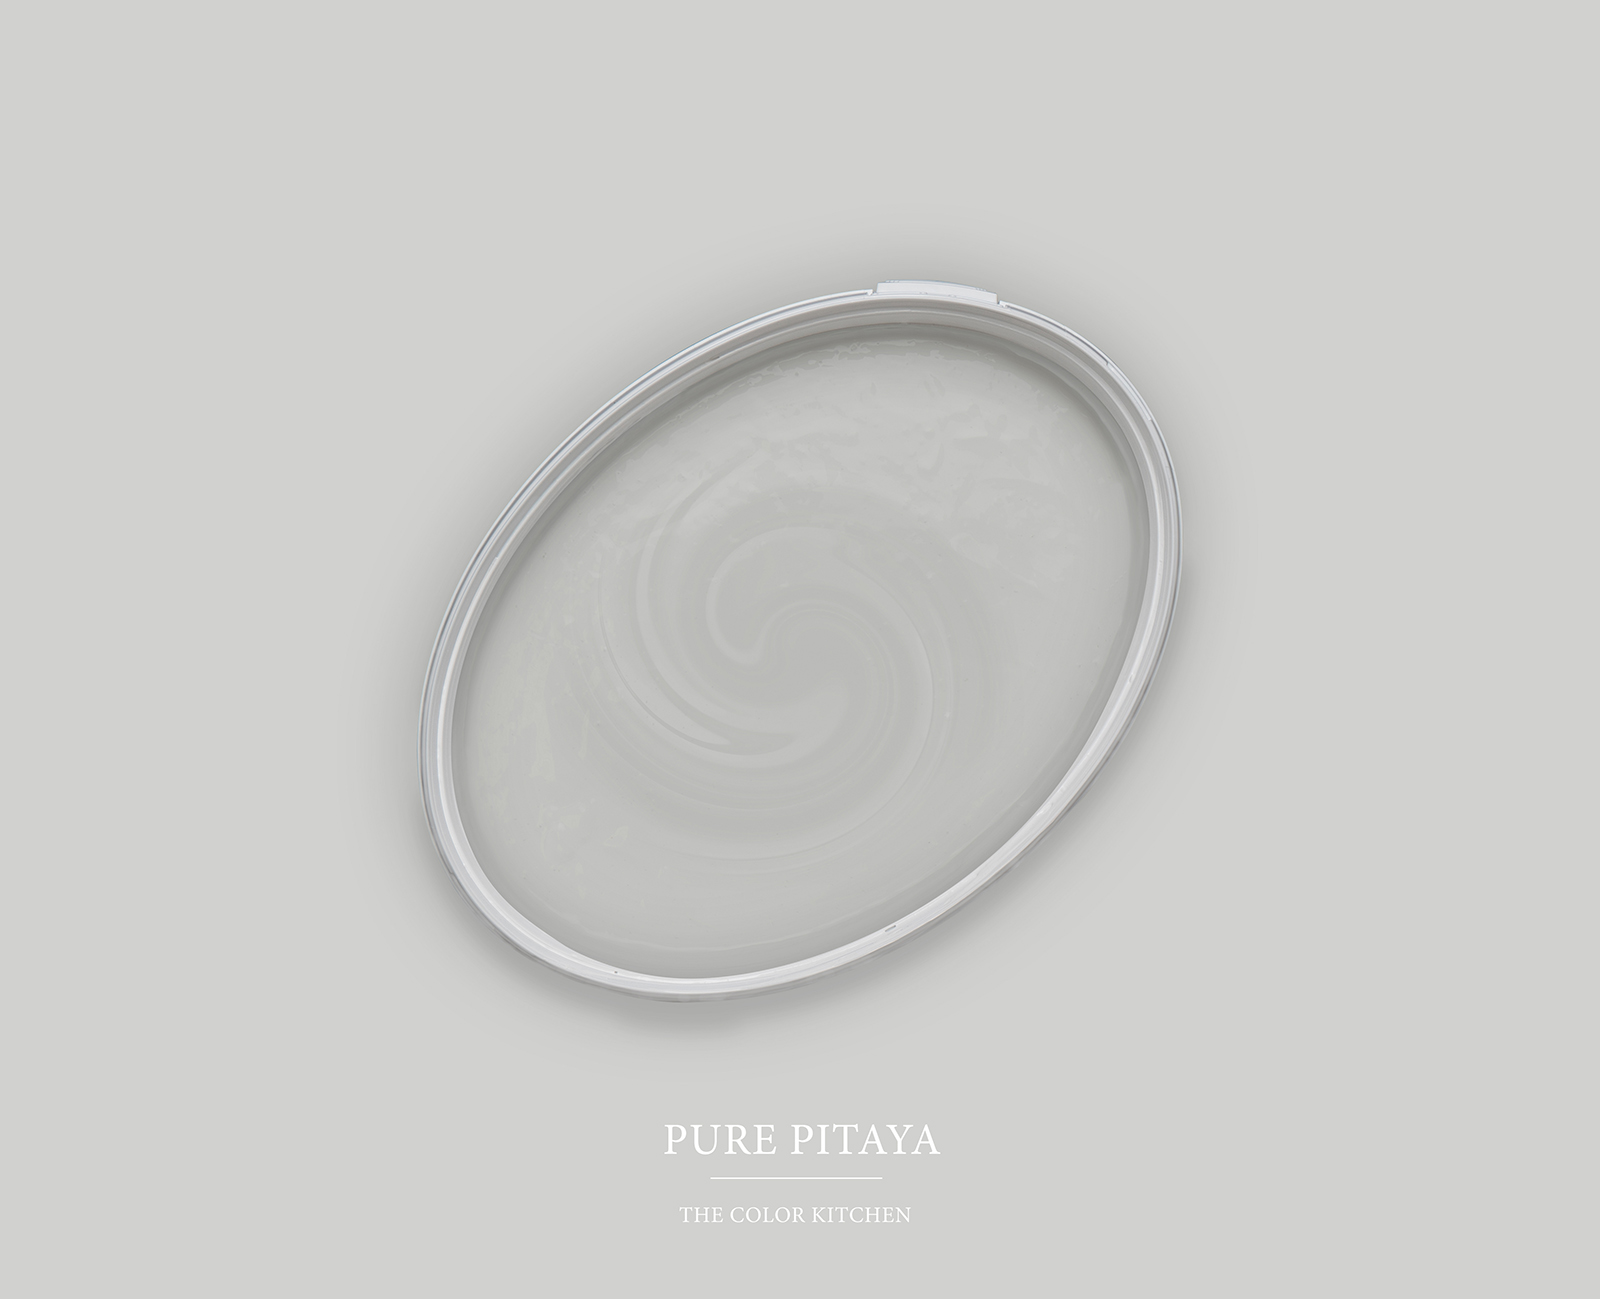 Wandfarbe in bläulichem Grau »Pure Pitaya« TCK1003 – 5 Liter
